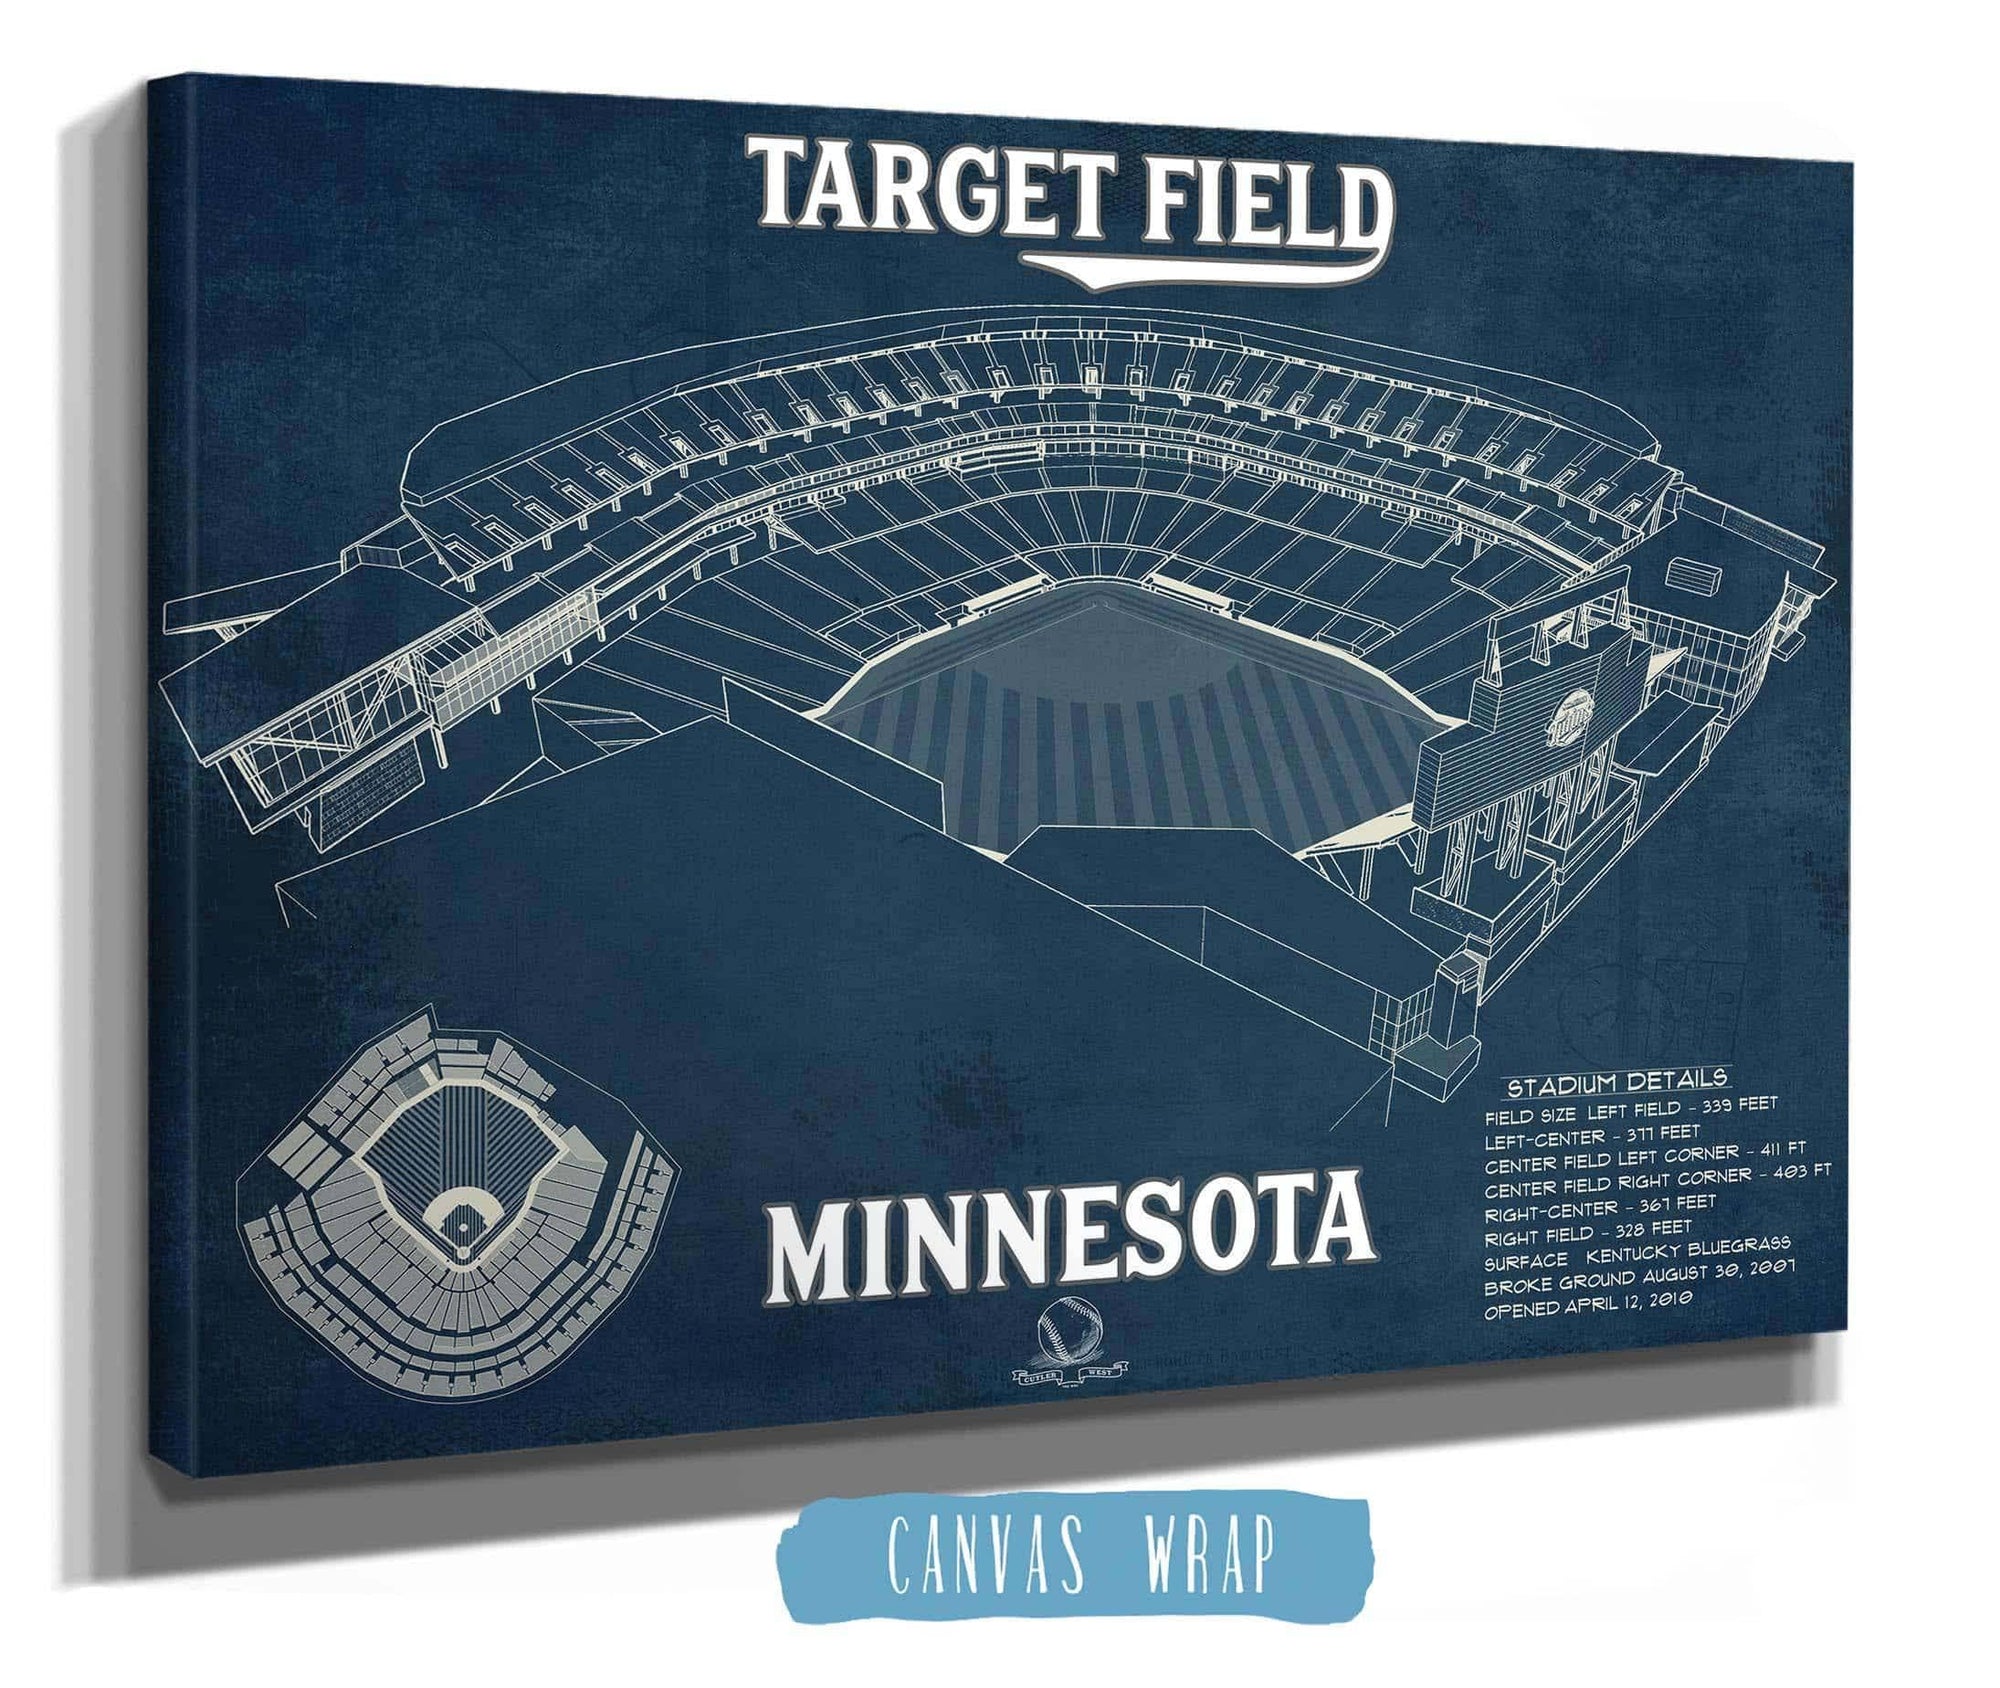 Cutler West Baseball Collection Vintage Minnesota Twins - Target Field Baseball Print